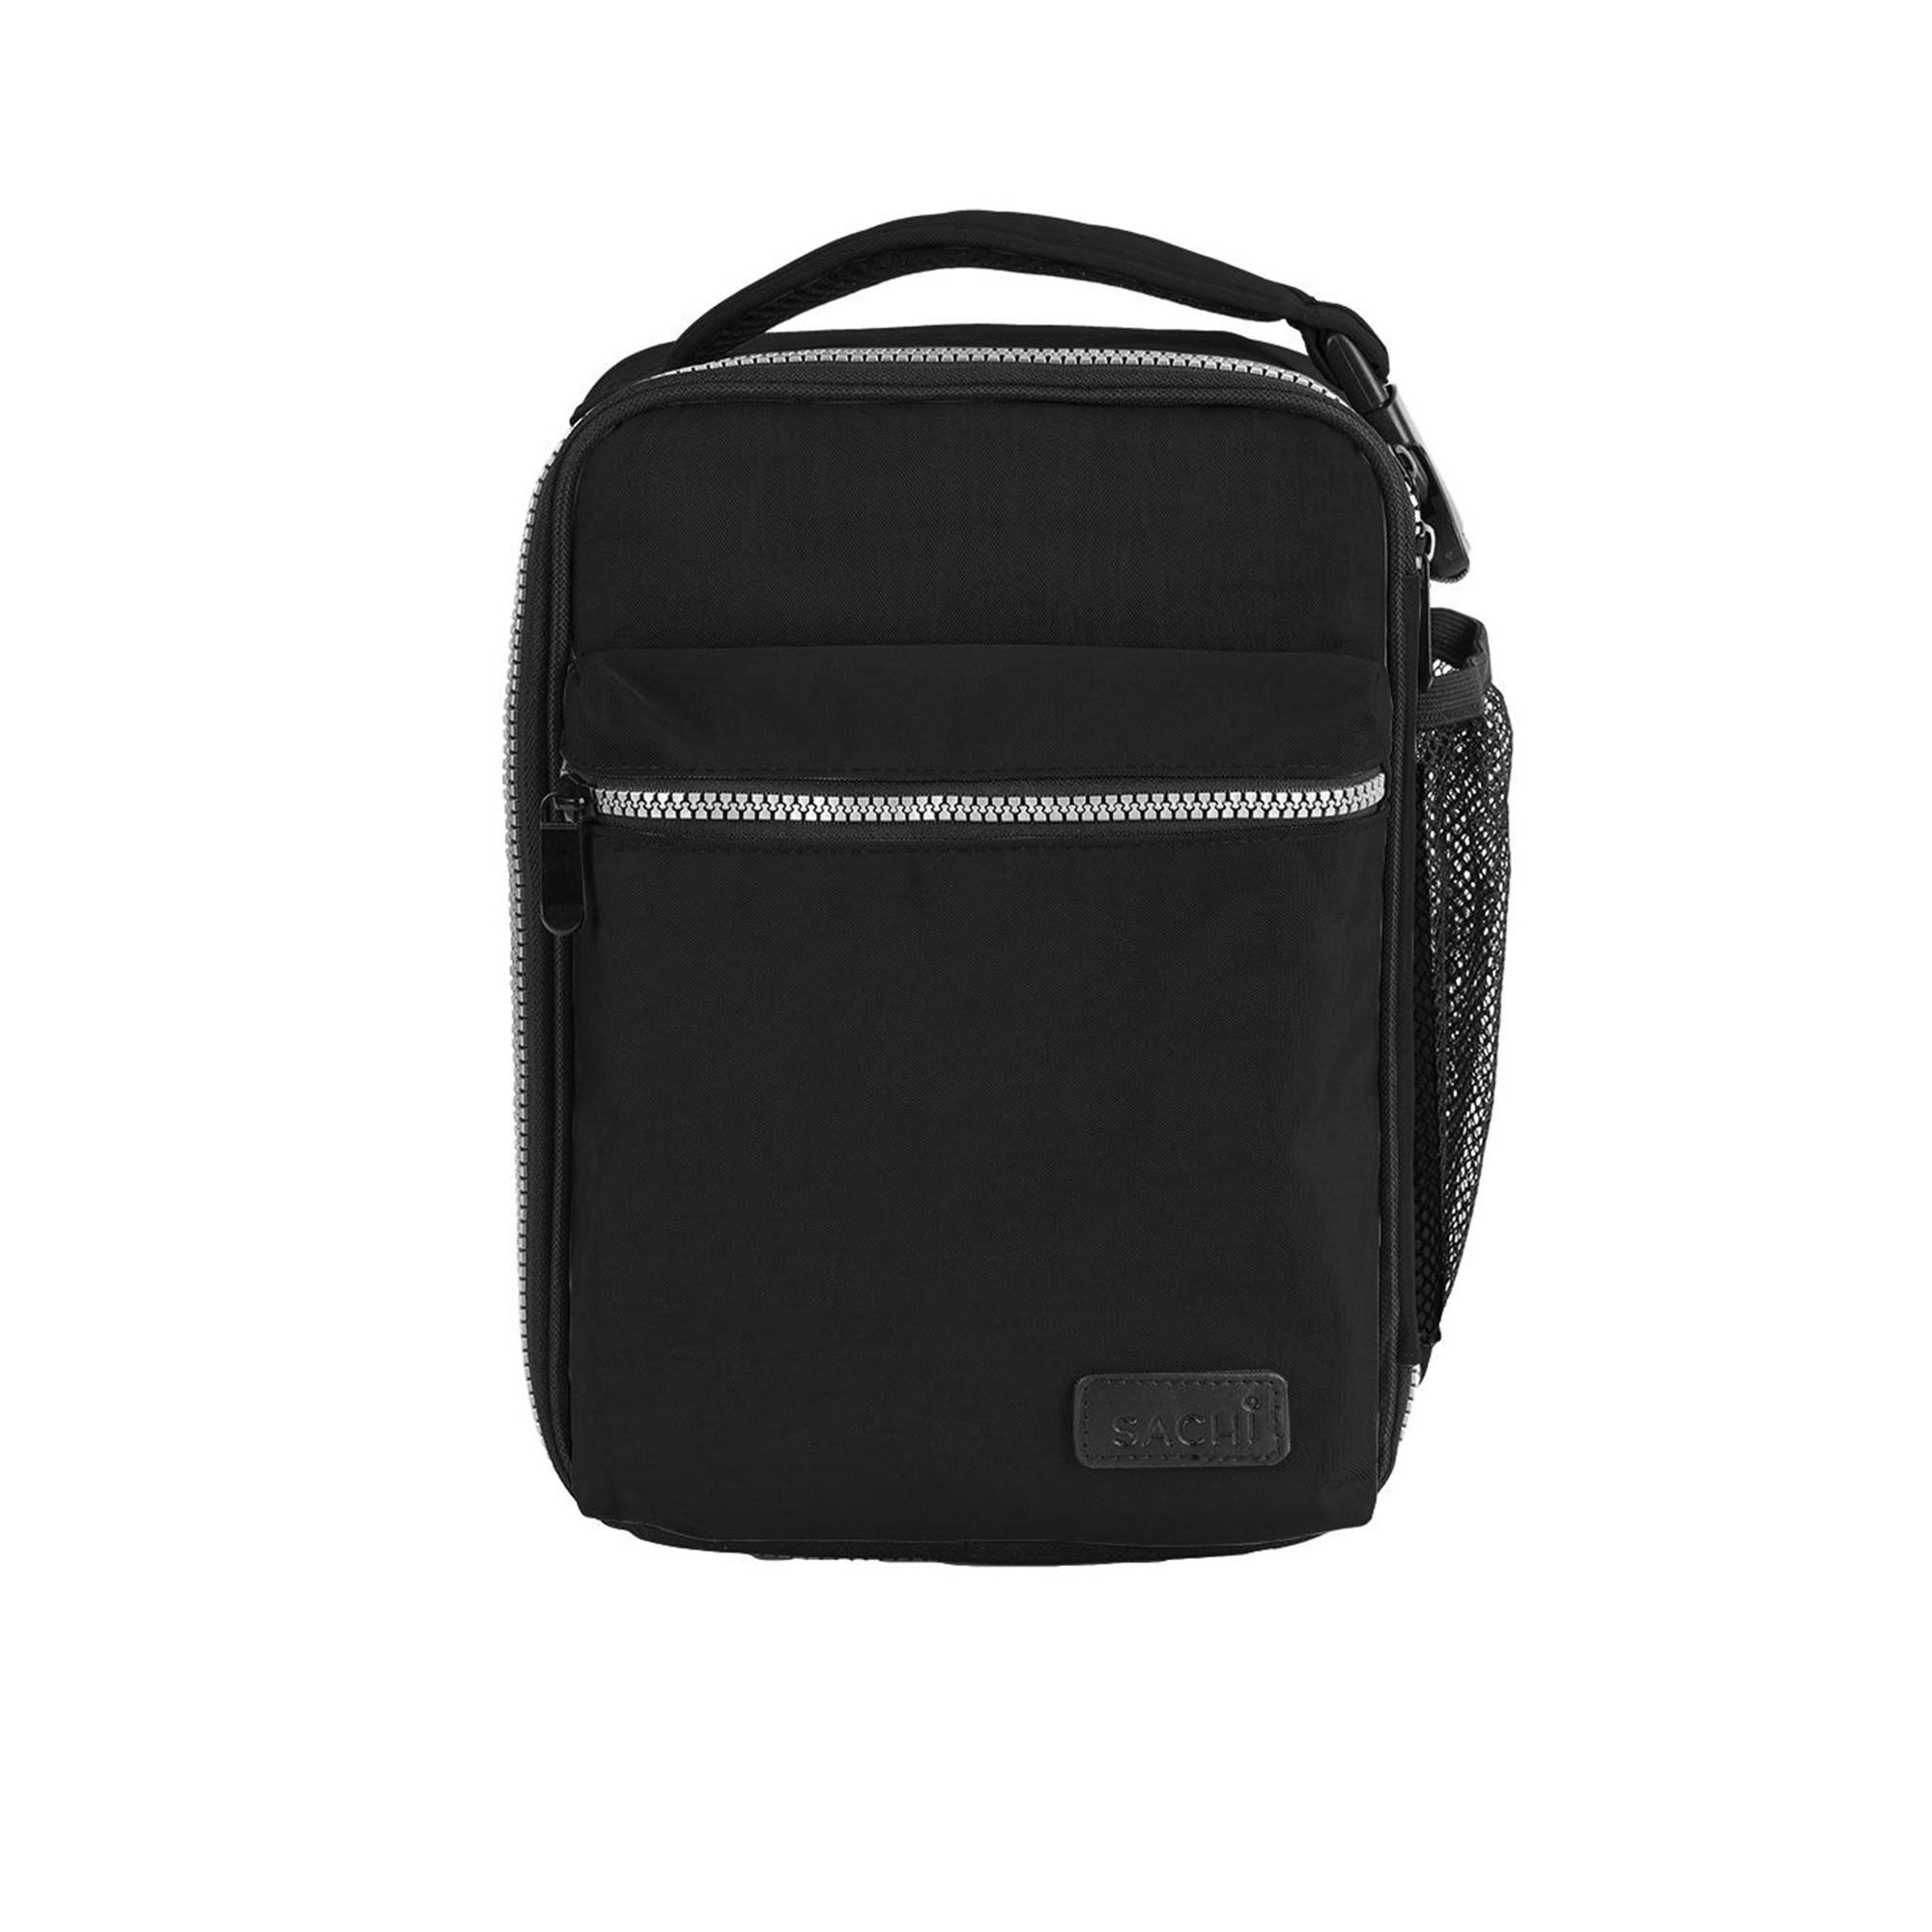 Sachi Explorer Insulated Lunch Bag Black Image 2